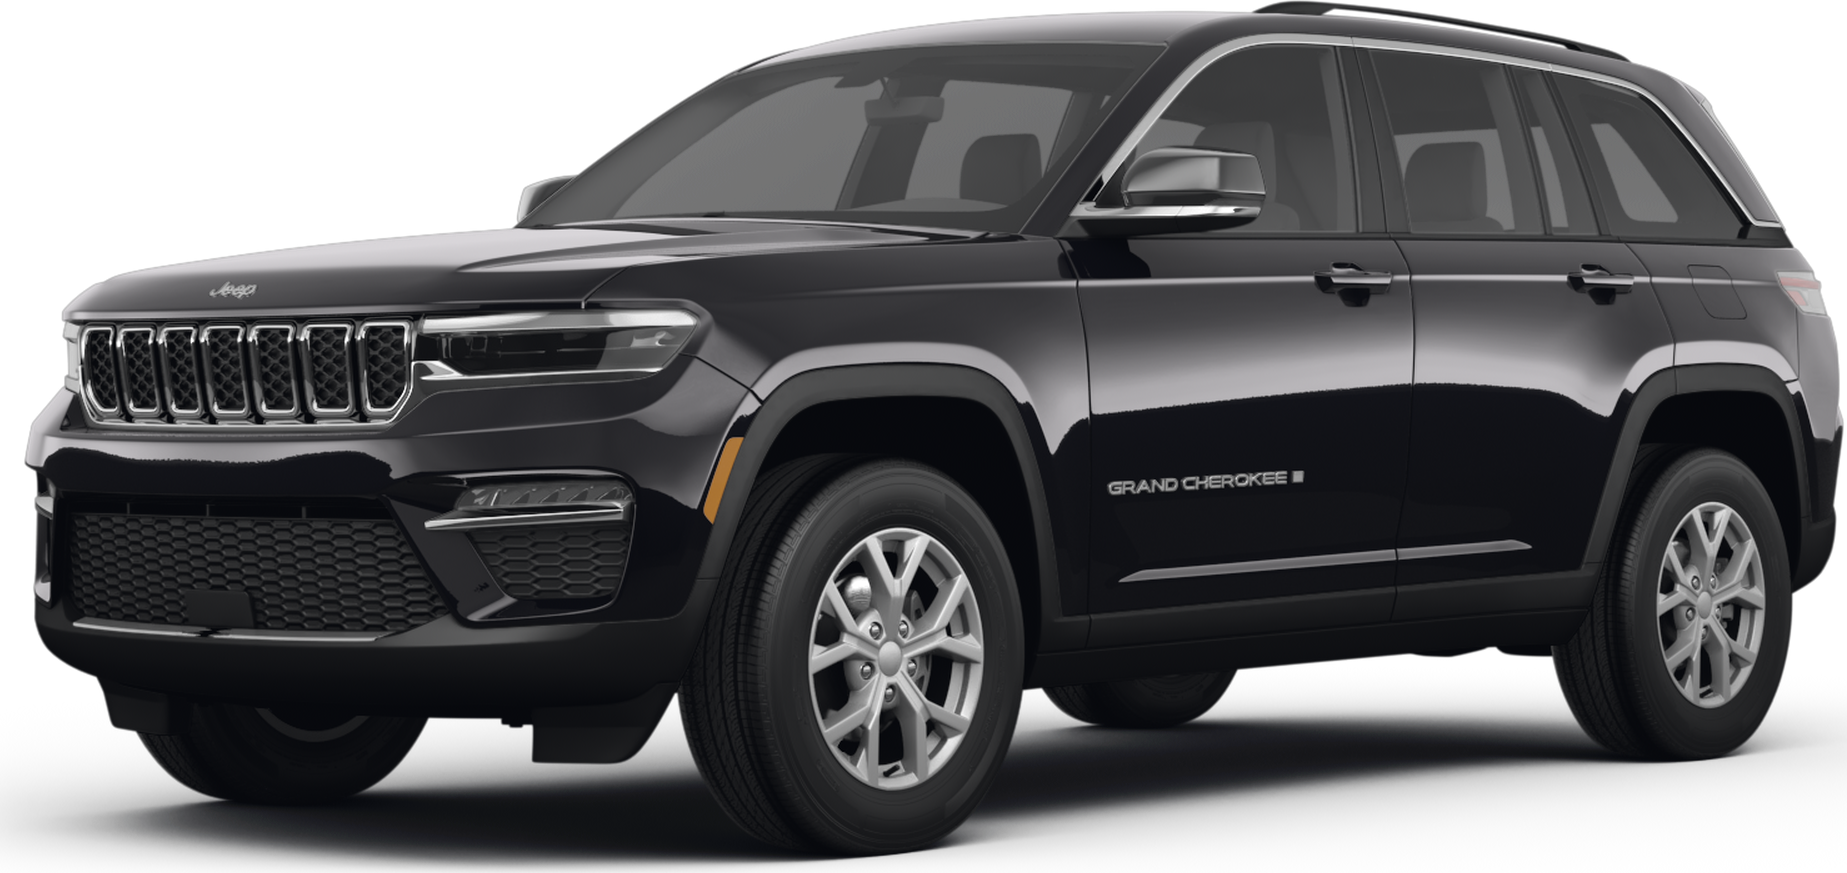 2023 Jeep Grand Cherokee Whats New – Get Calendar 2023 Update